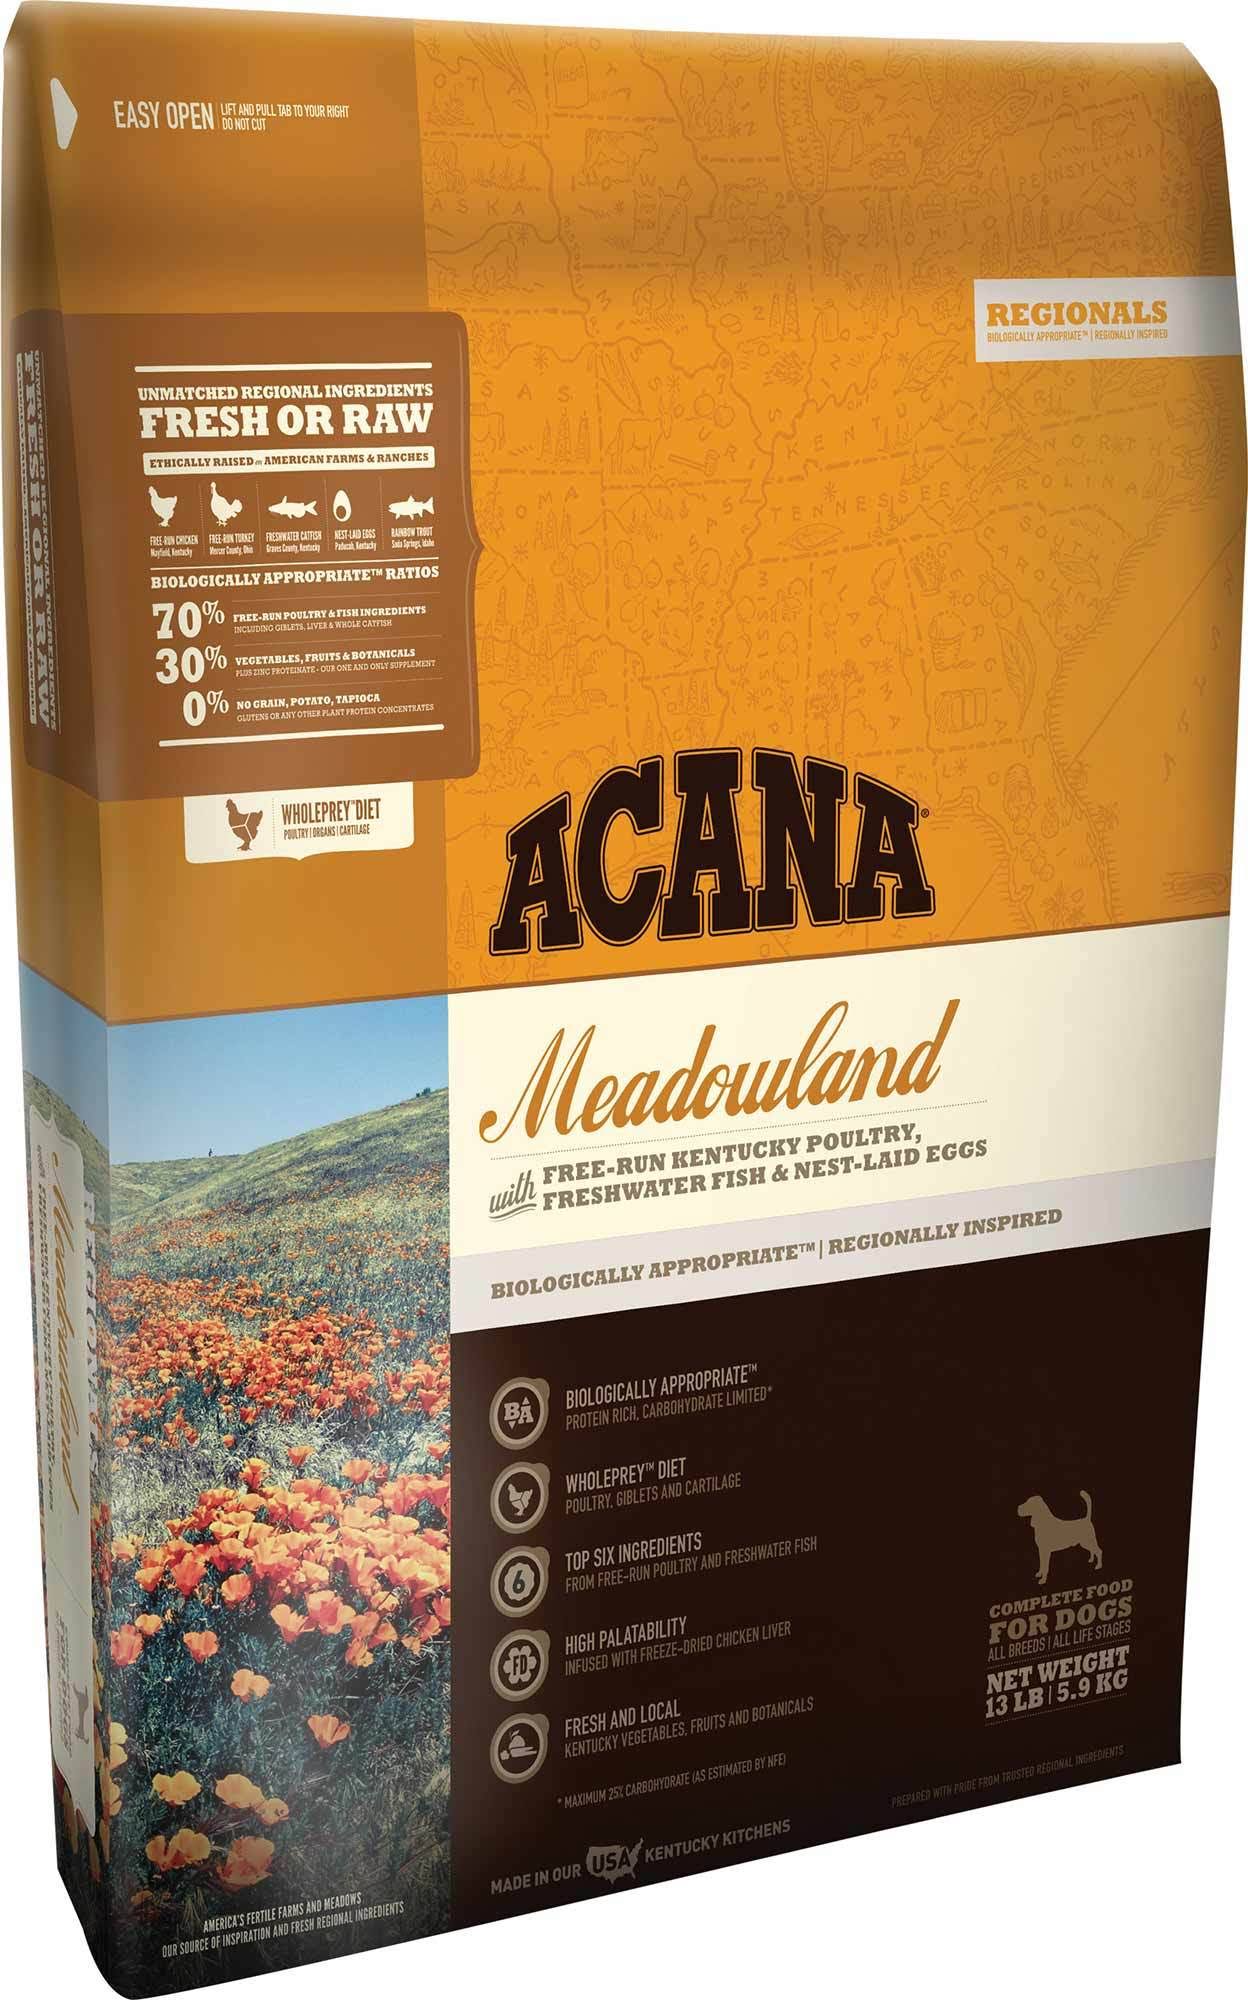 ACANA Regionals Meadowland Dry Dog Food, 25 lb